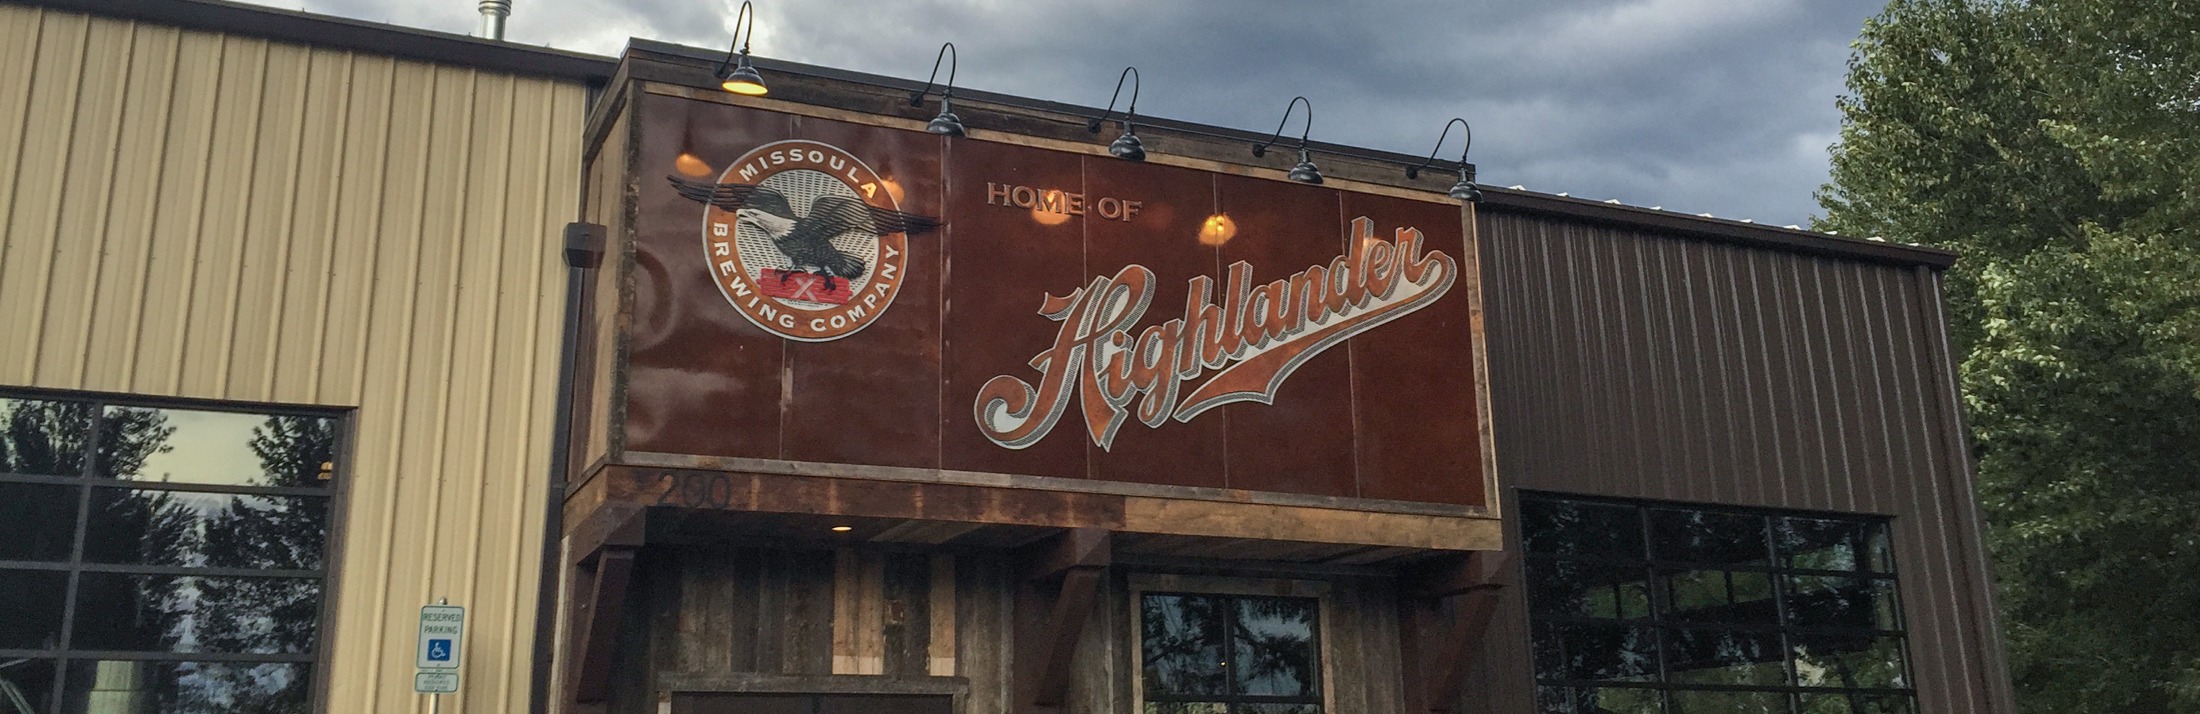 Top 10 Cities for Beer Drinkers - Missoula, Montana